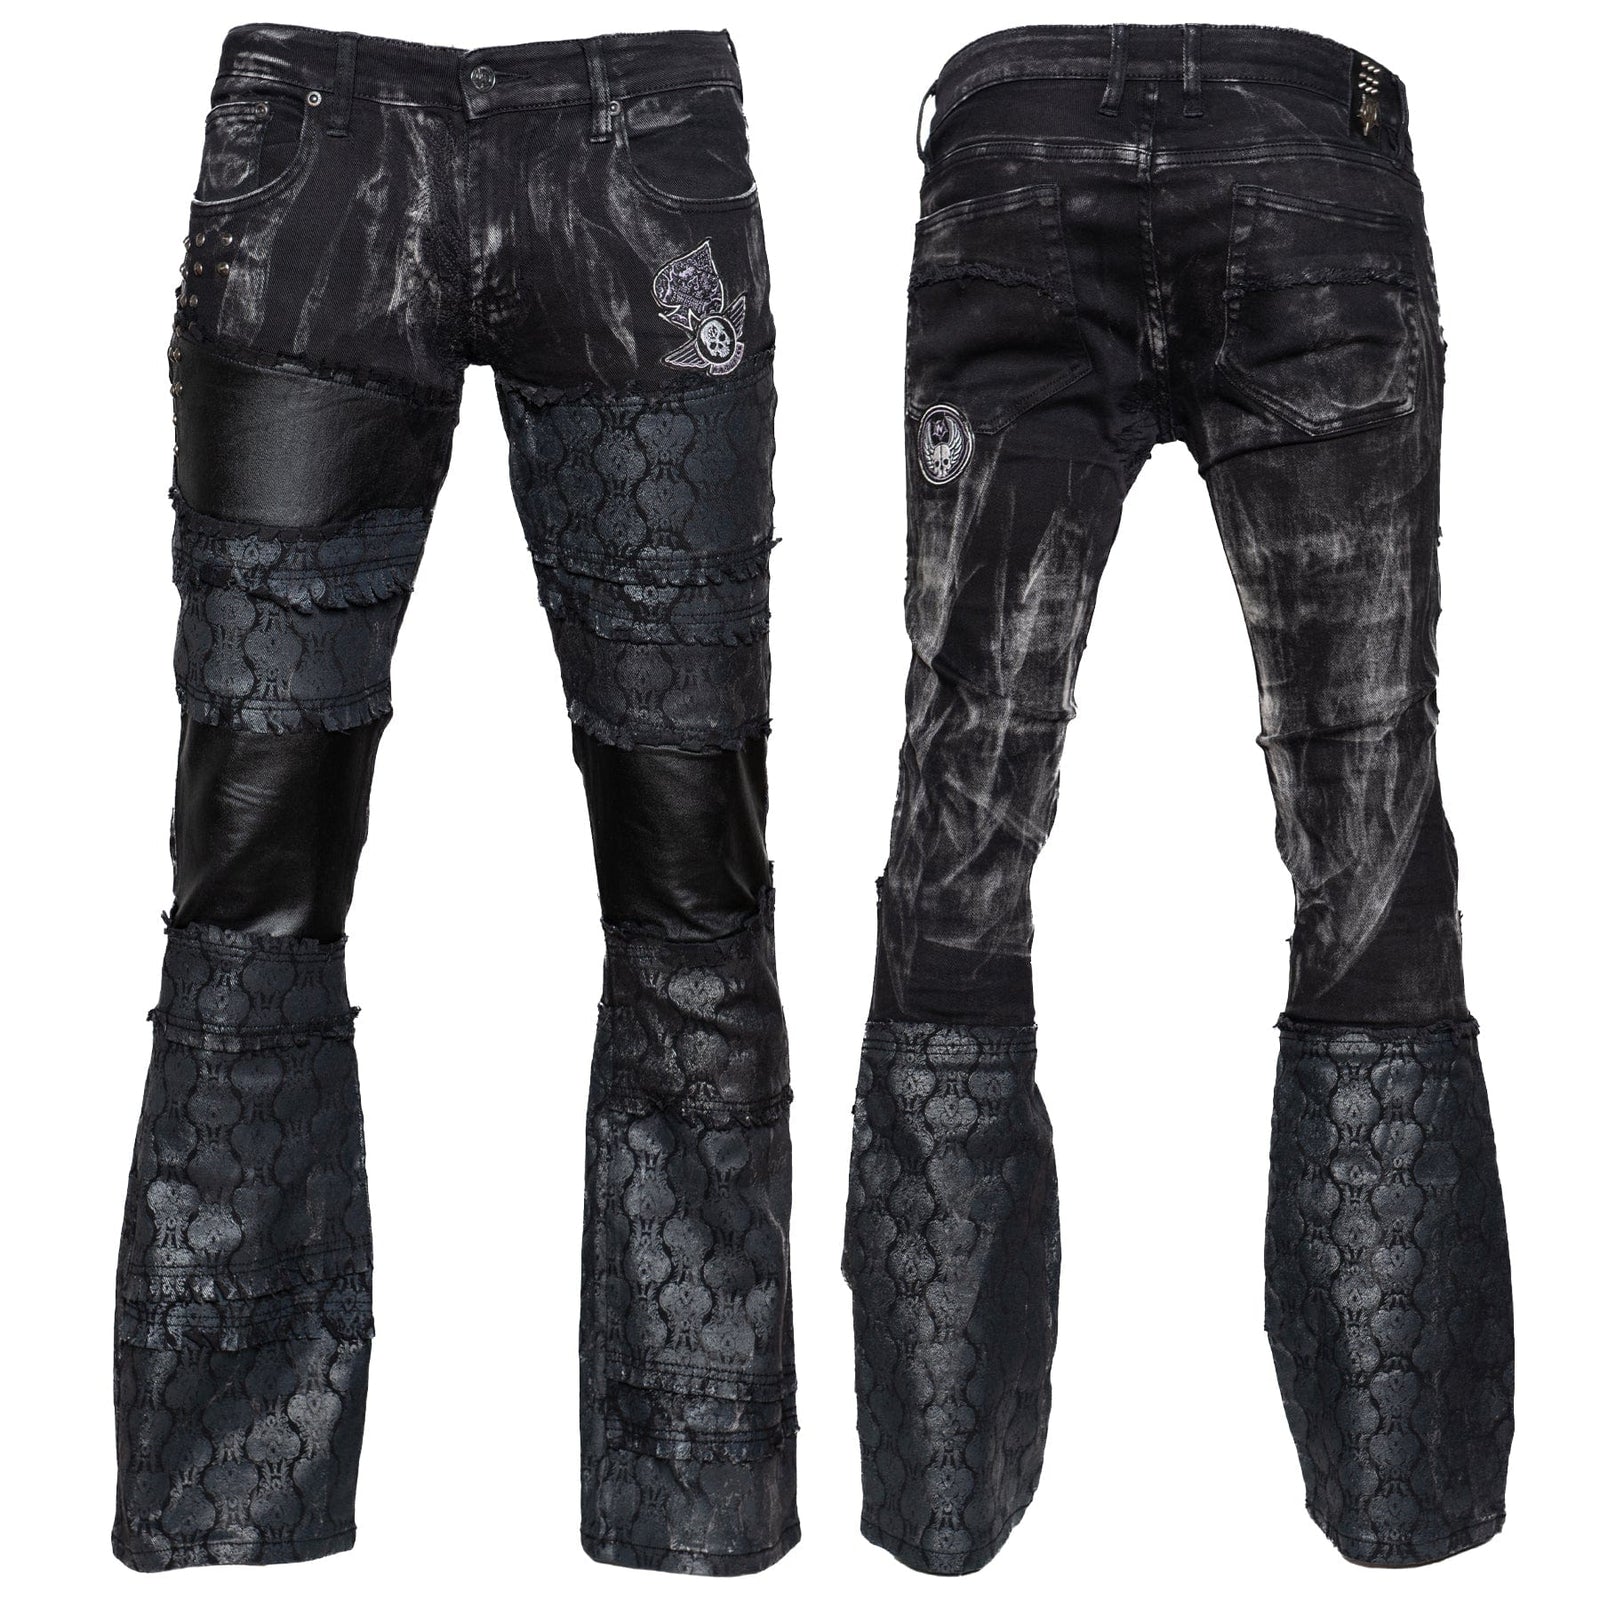 Custom Chop Shop Pants Wornstar Custom Jeans - Nightfall - Ready to ship - Size 34